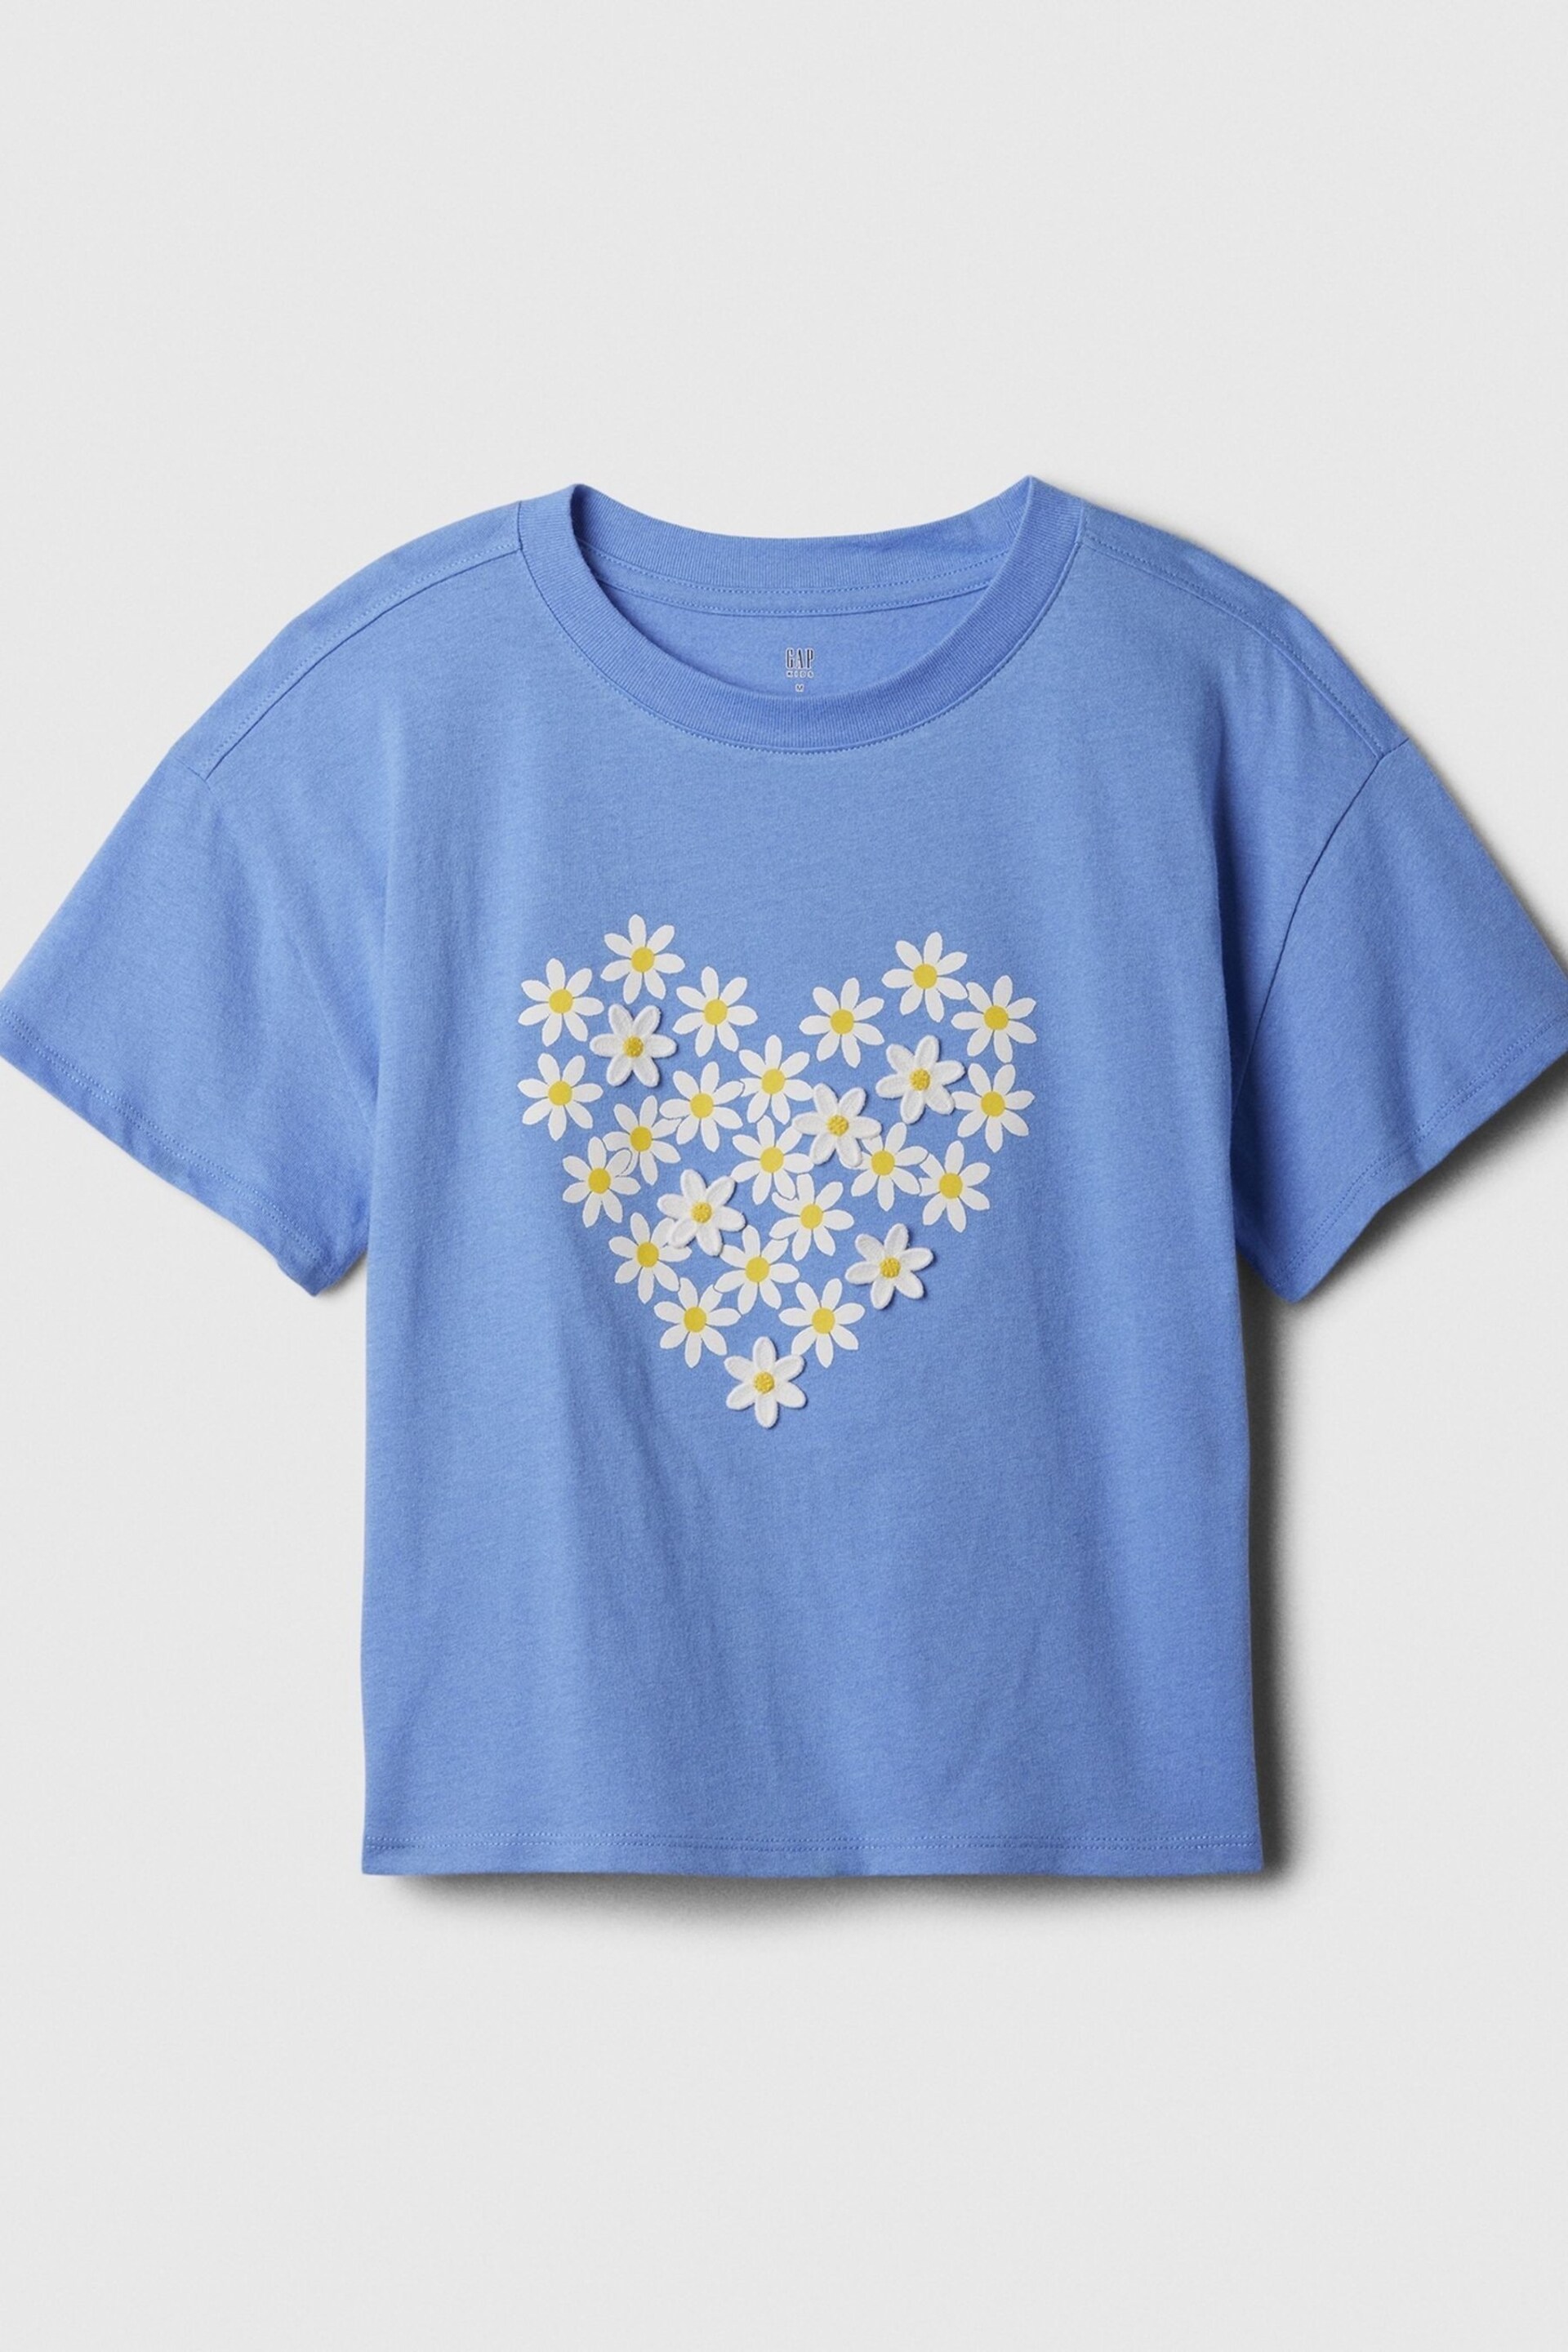 Gap Blue 3D Flower Graphic Short Sleeve Crew Neck T-Shirt (4-13yrs) - Image 1 of 2